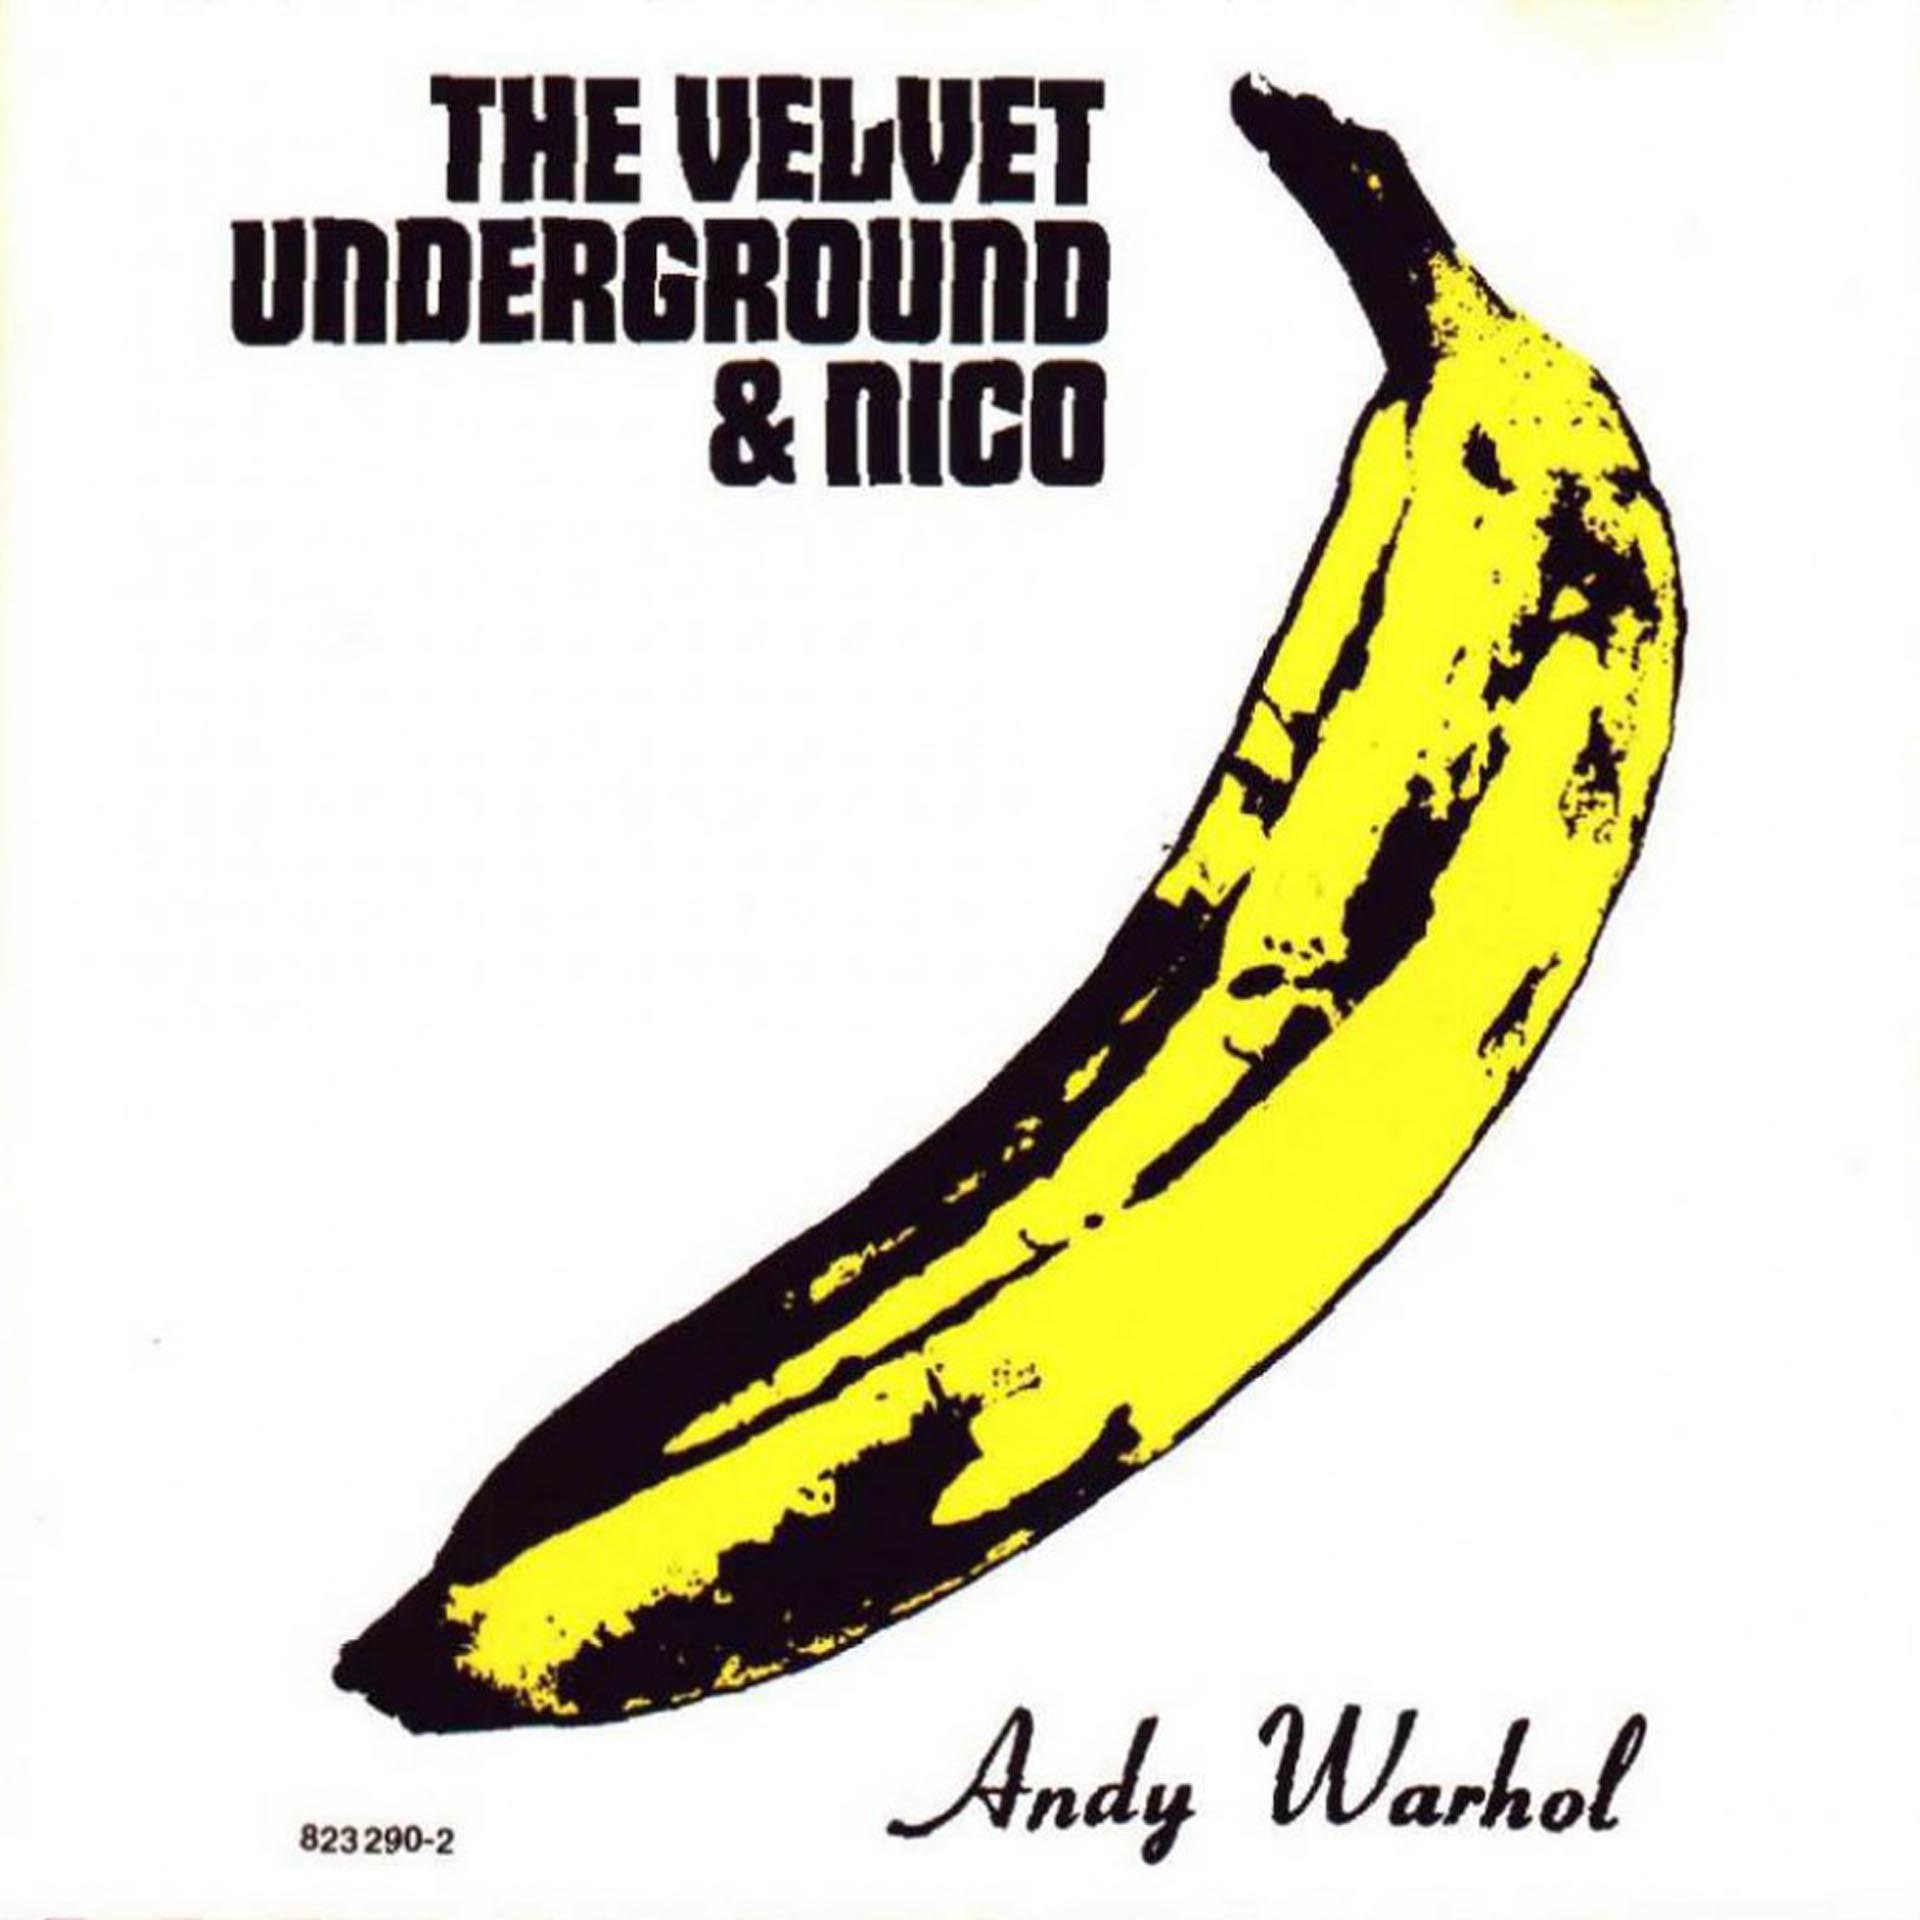 Tapa de "The Velvet Underground & Nico", diseñada por Warhol